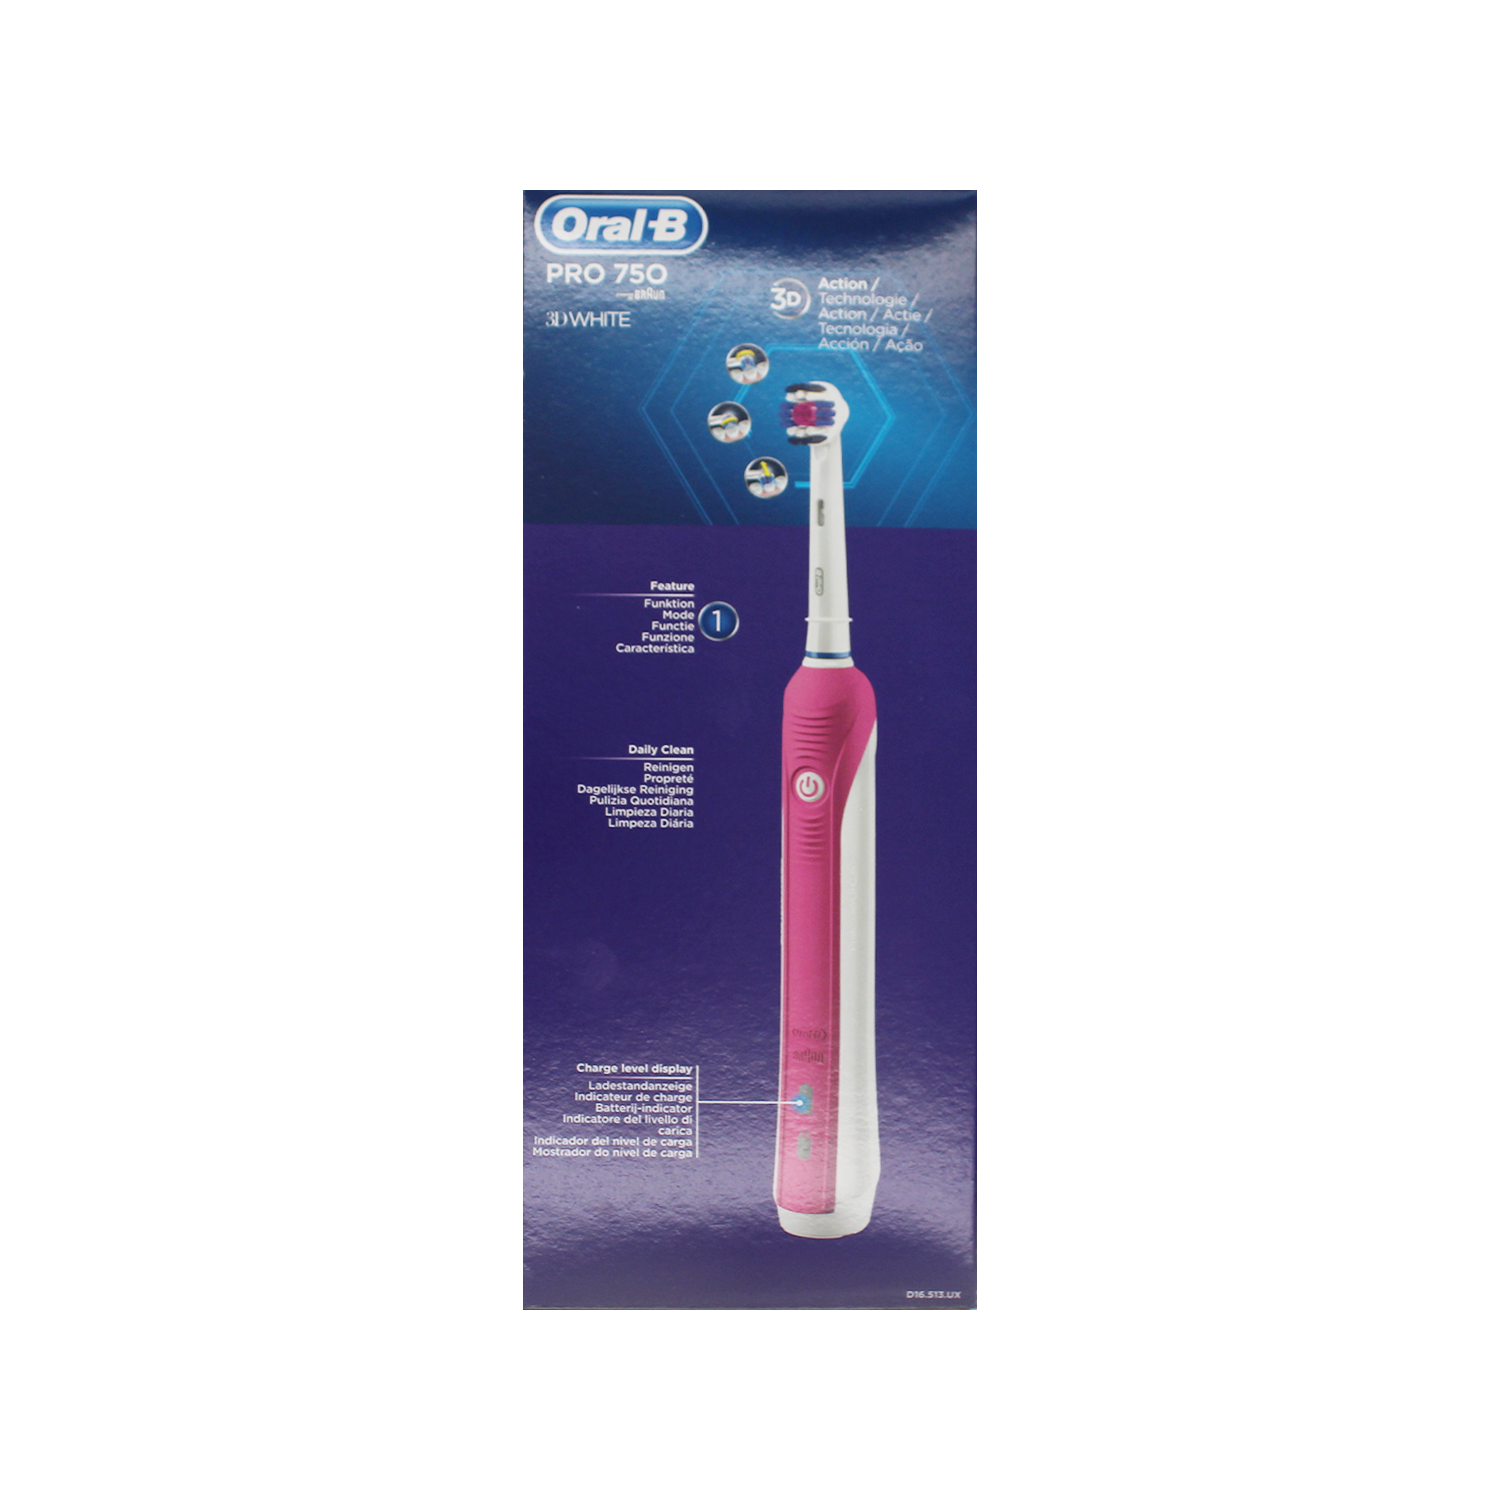 Oral-B Pro 750 3D weiß elektr. Zahnbürste Pink